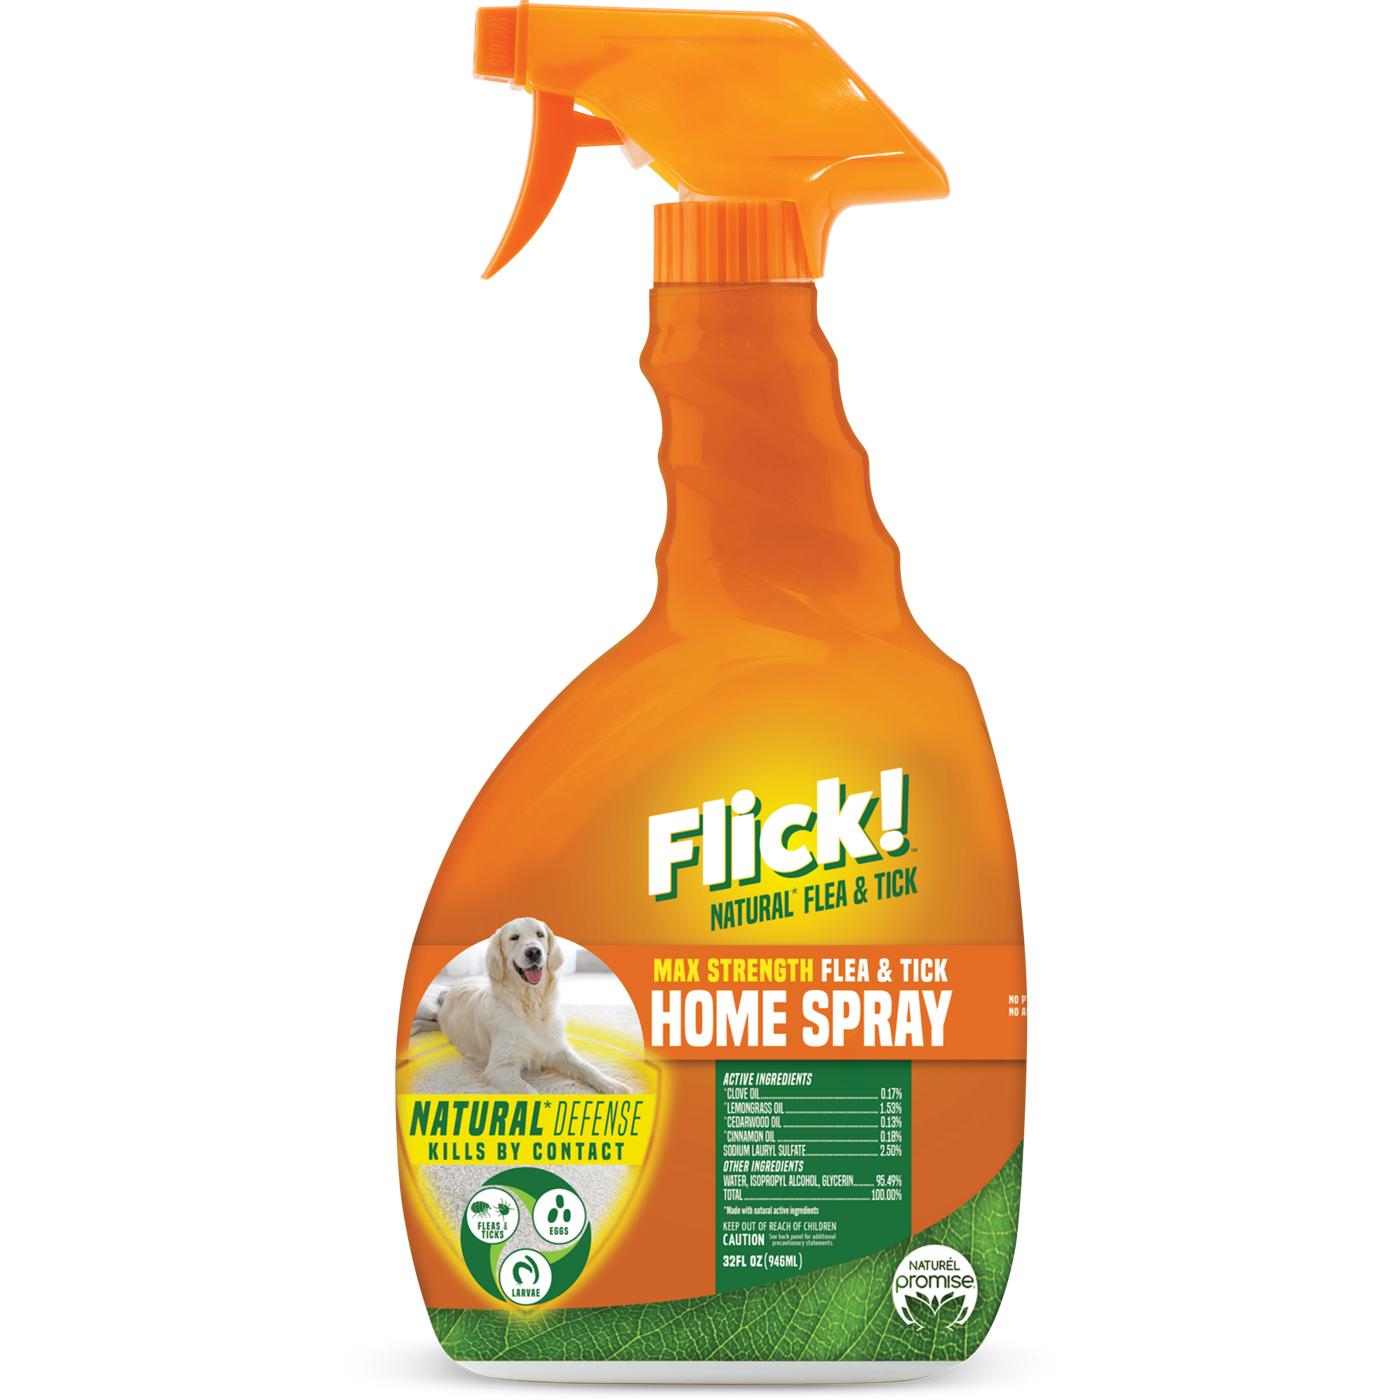 Flick! Max Strength Flea & Tick Home Spray; image 1 of 7